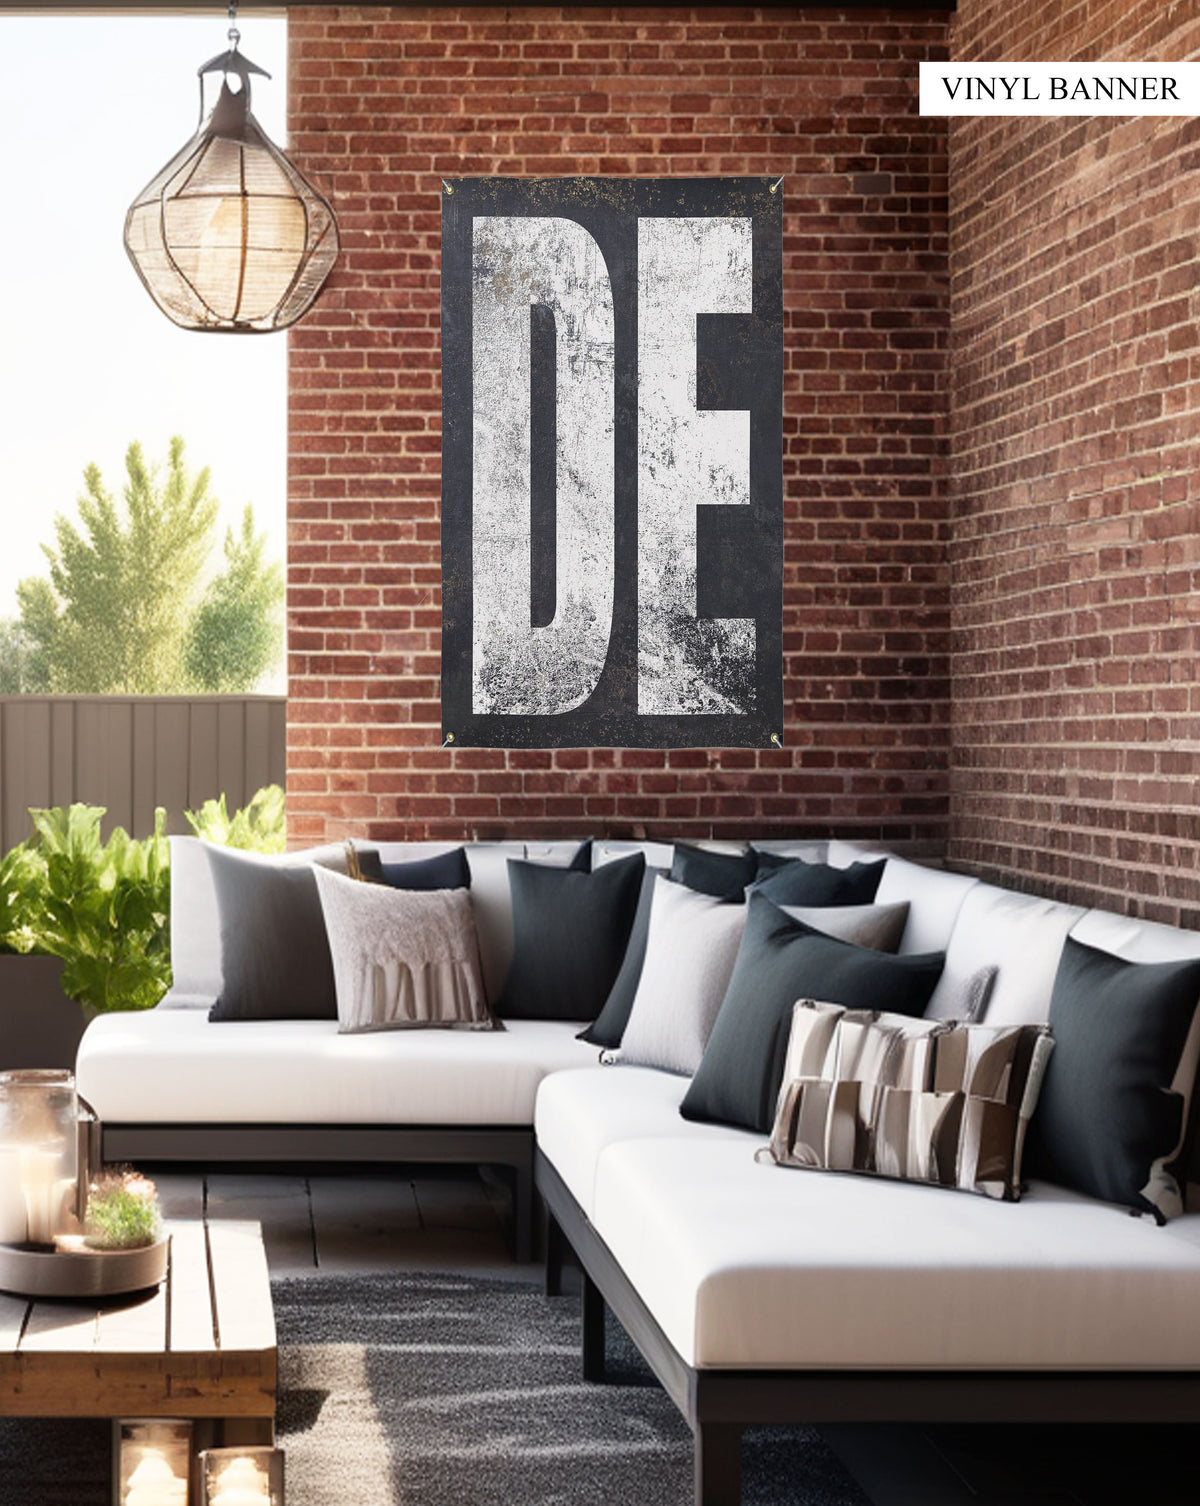 "Elegant Delaware Heritage Vinyl Banner: Weather-resistant 'DE' design, blending seamlessly with any decor style."